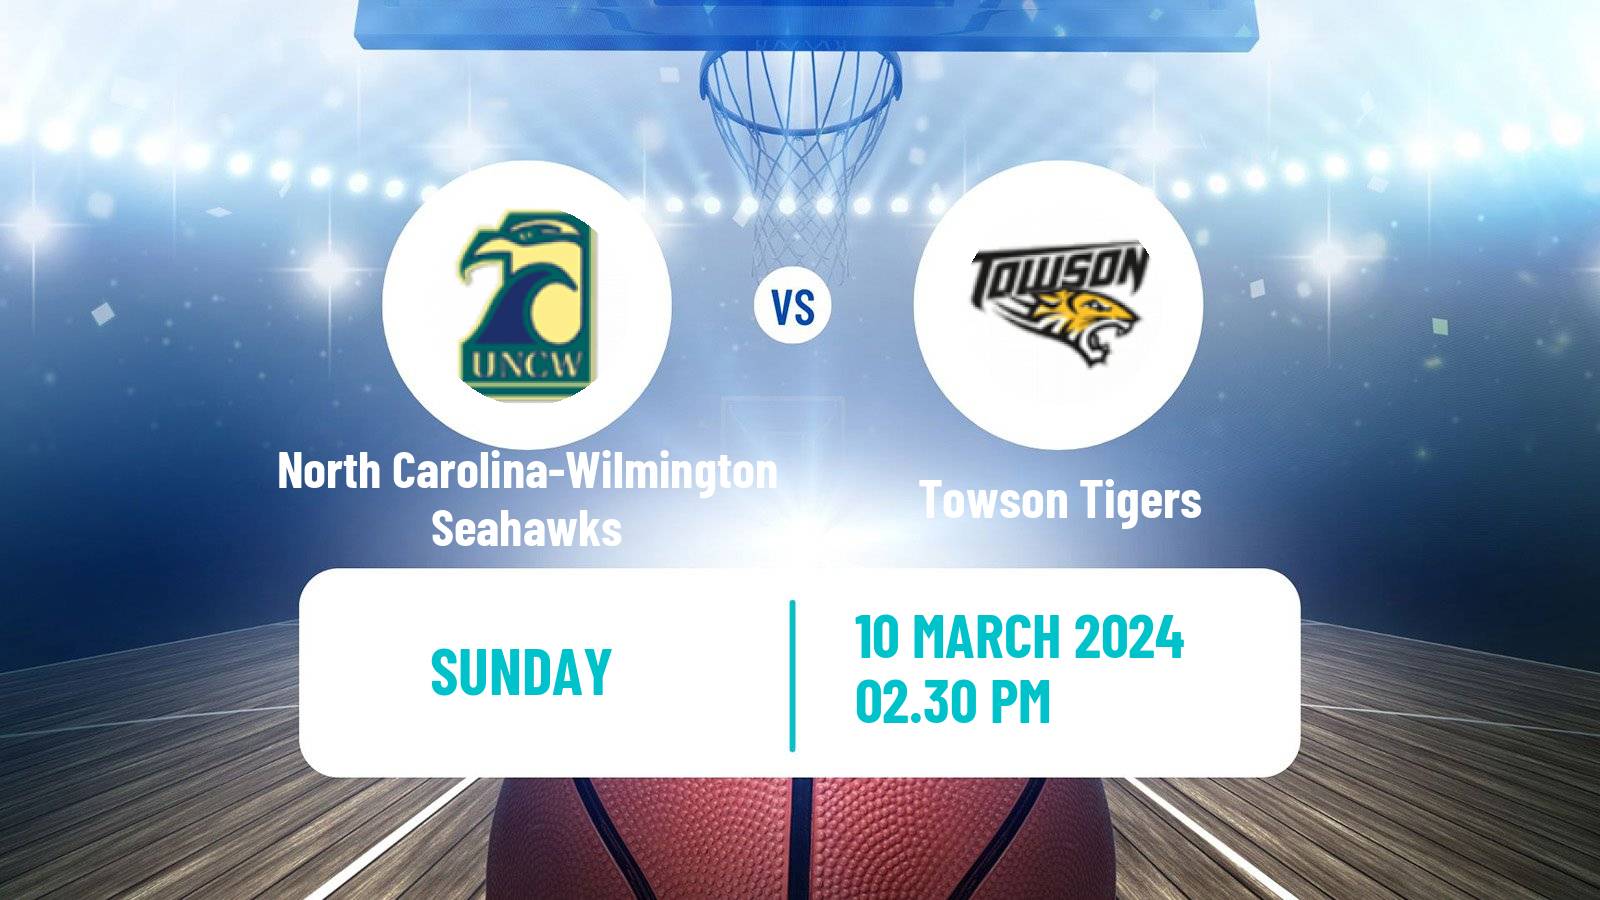 Basketball NCAA College Basketball North Carolina-Wilmington Seahawks - Towson Tigers